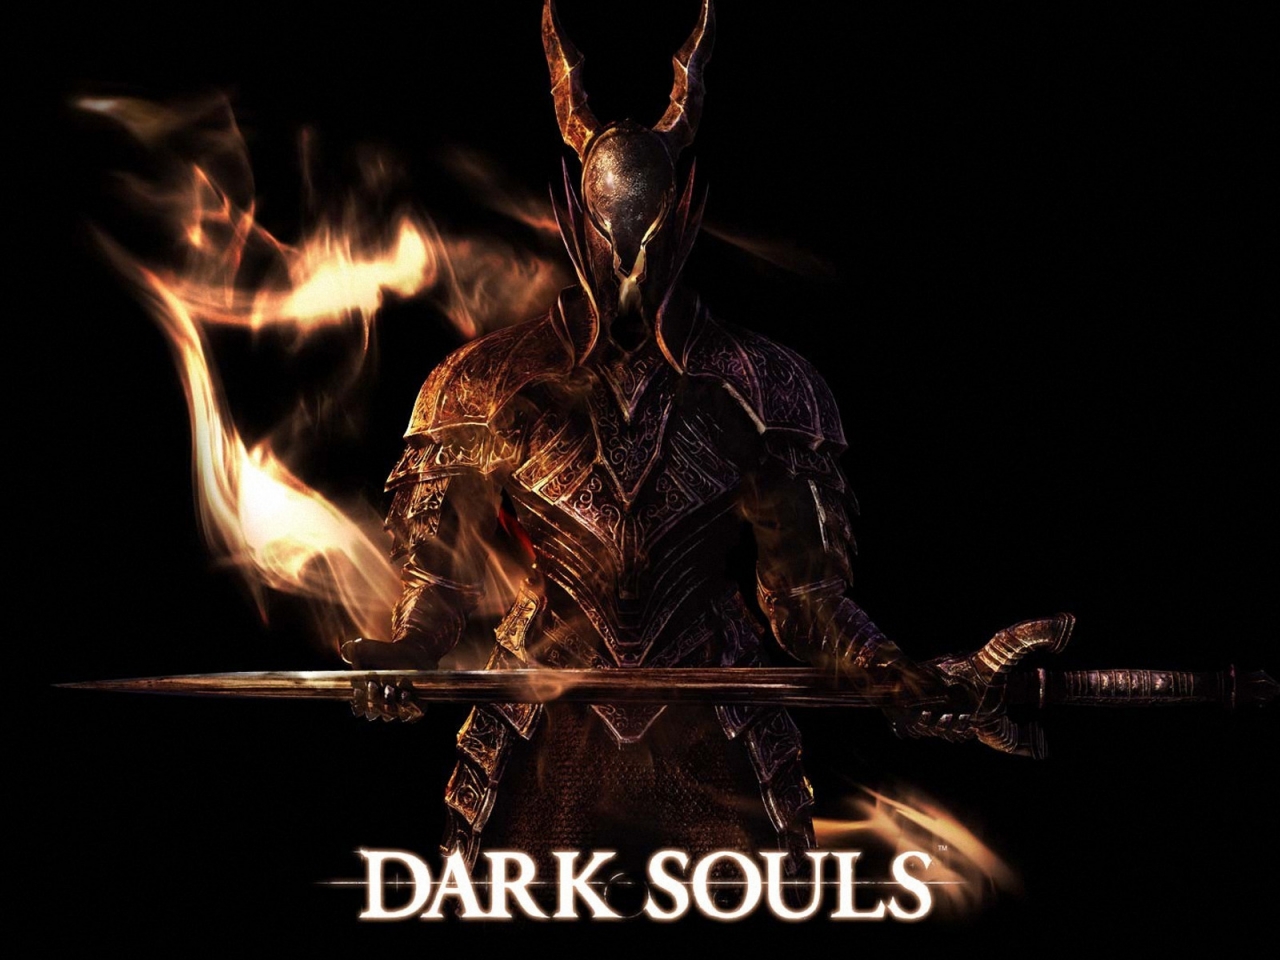 Dark Souls Art for 1280 x 960 resolution